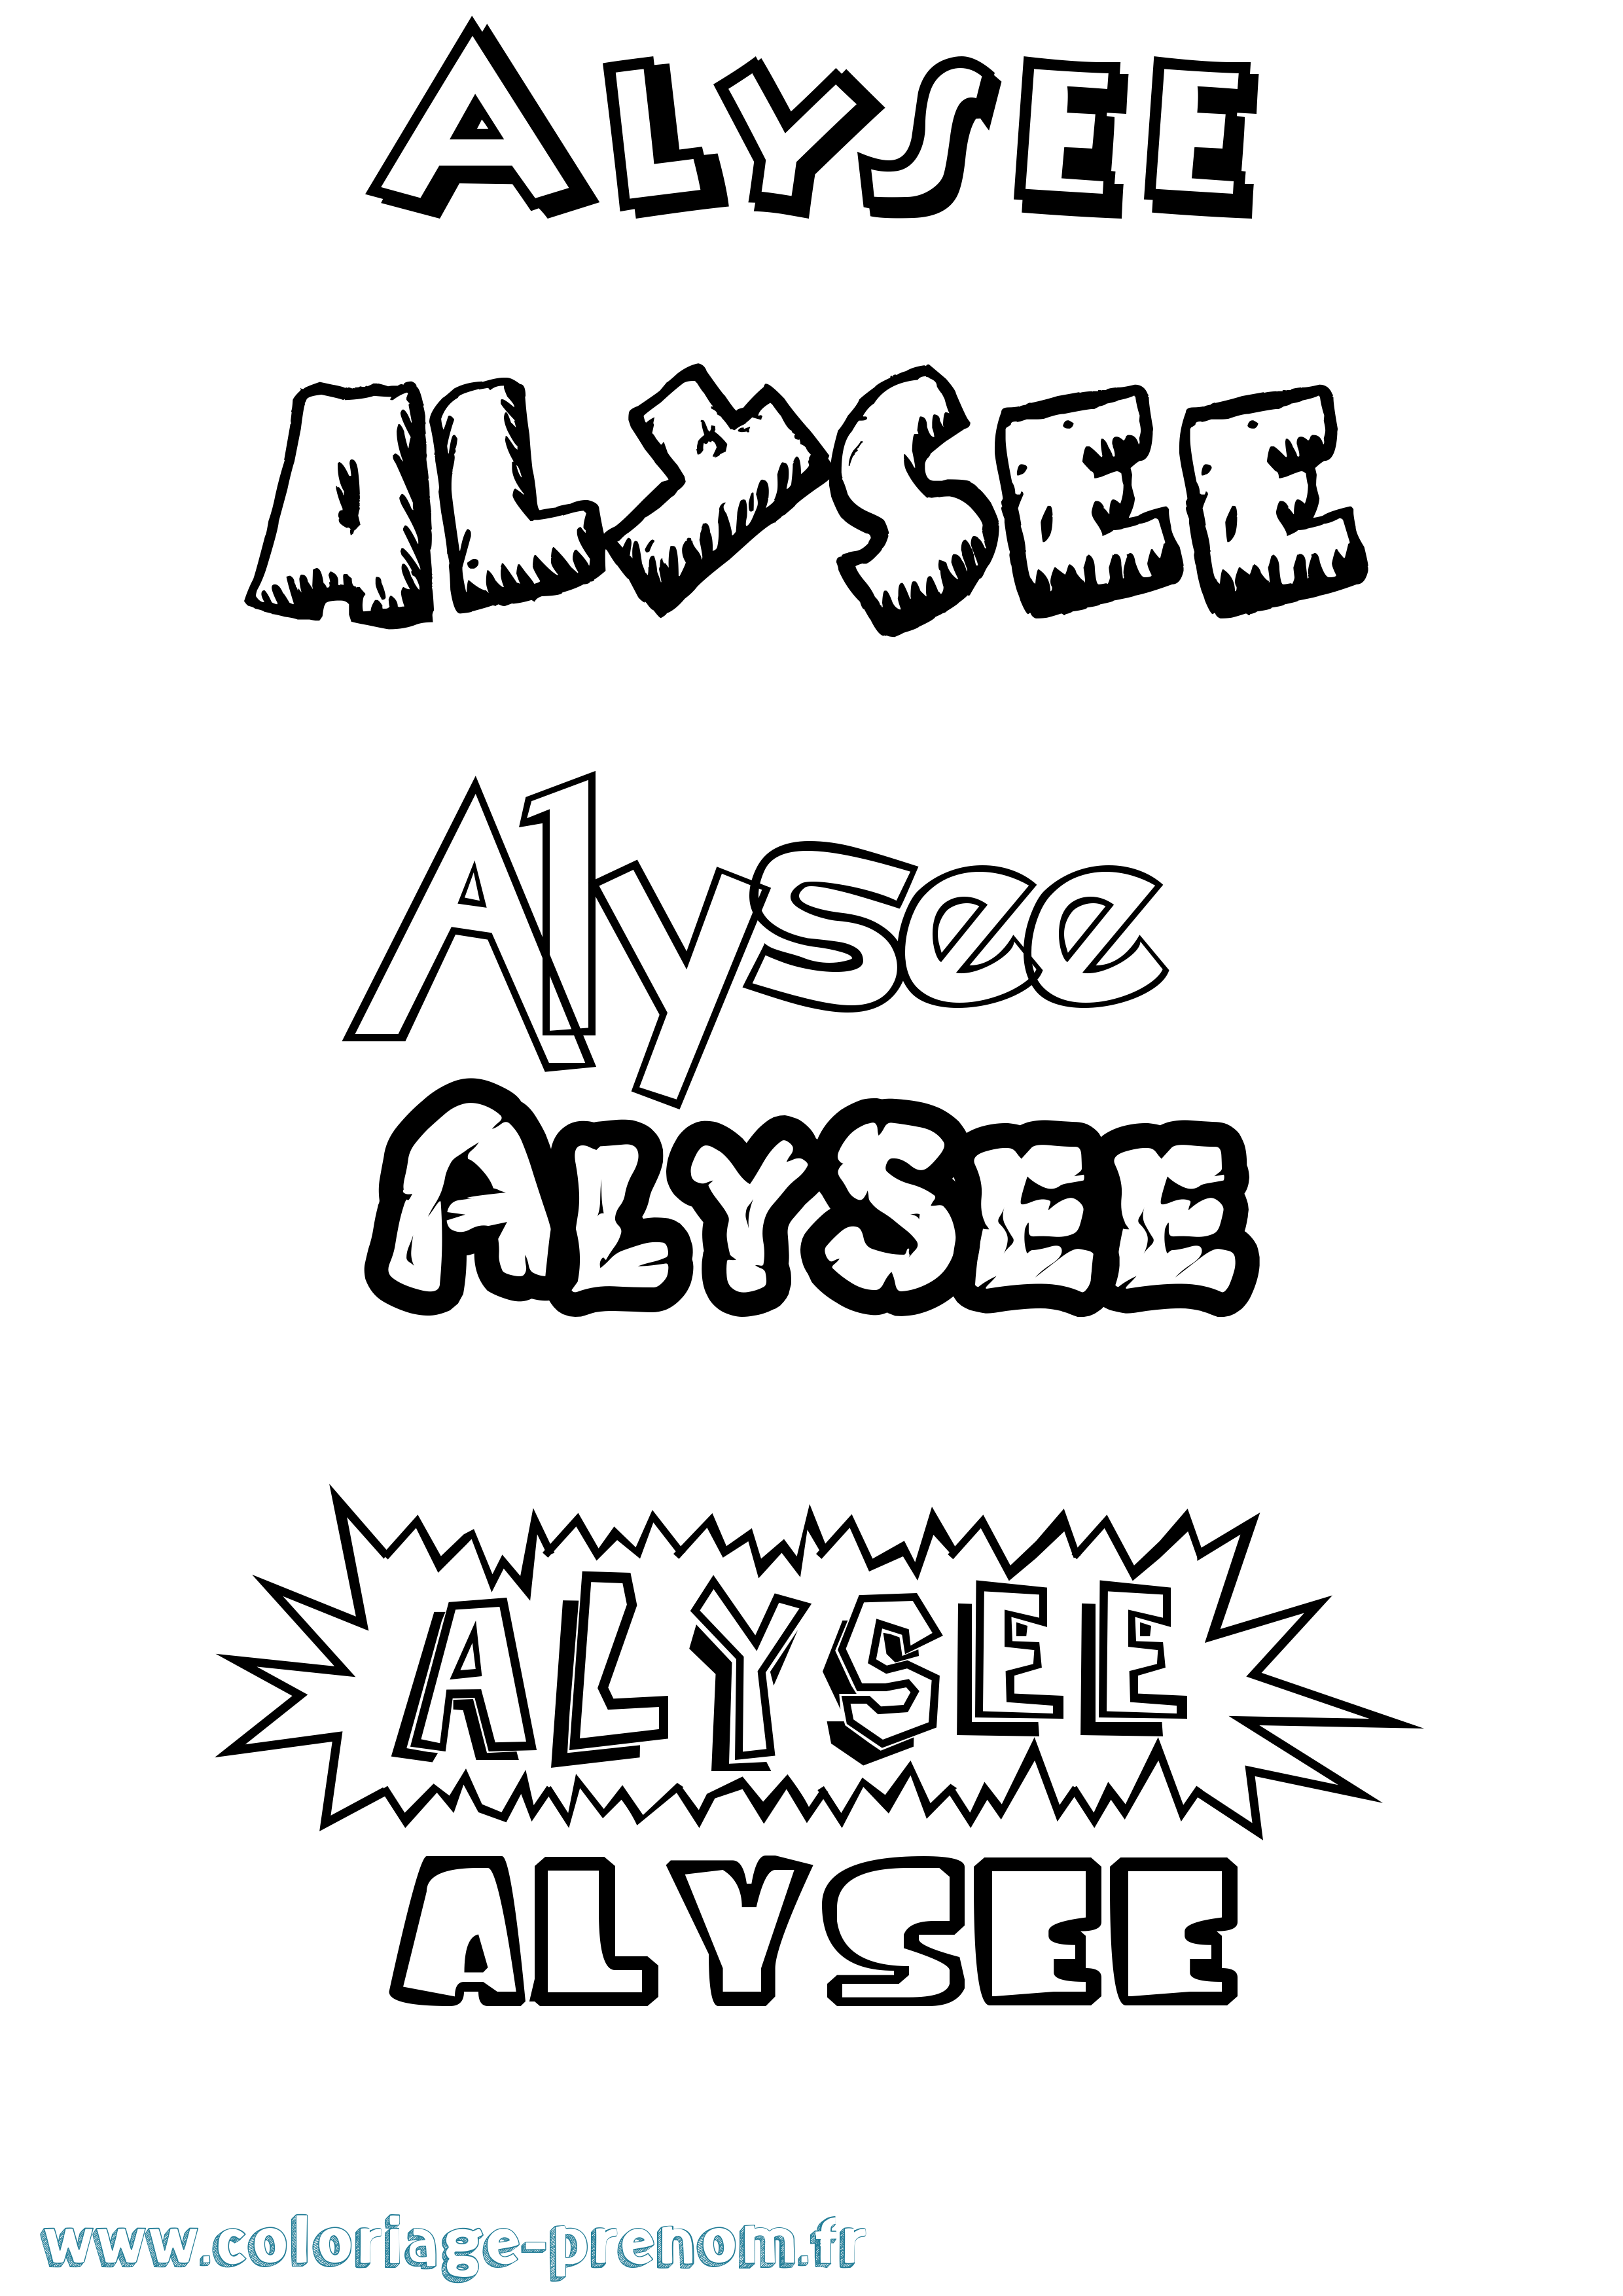 Coloriage prénom Alysee Dessin Animé